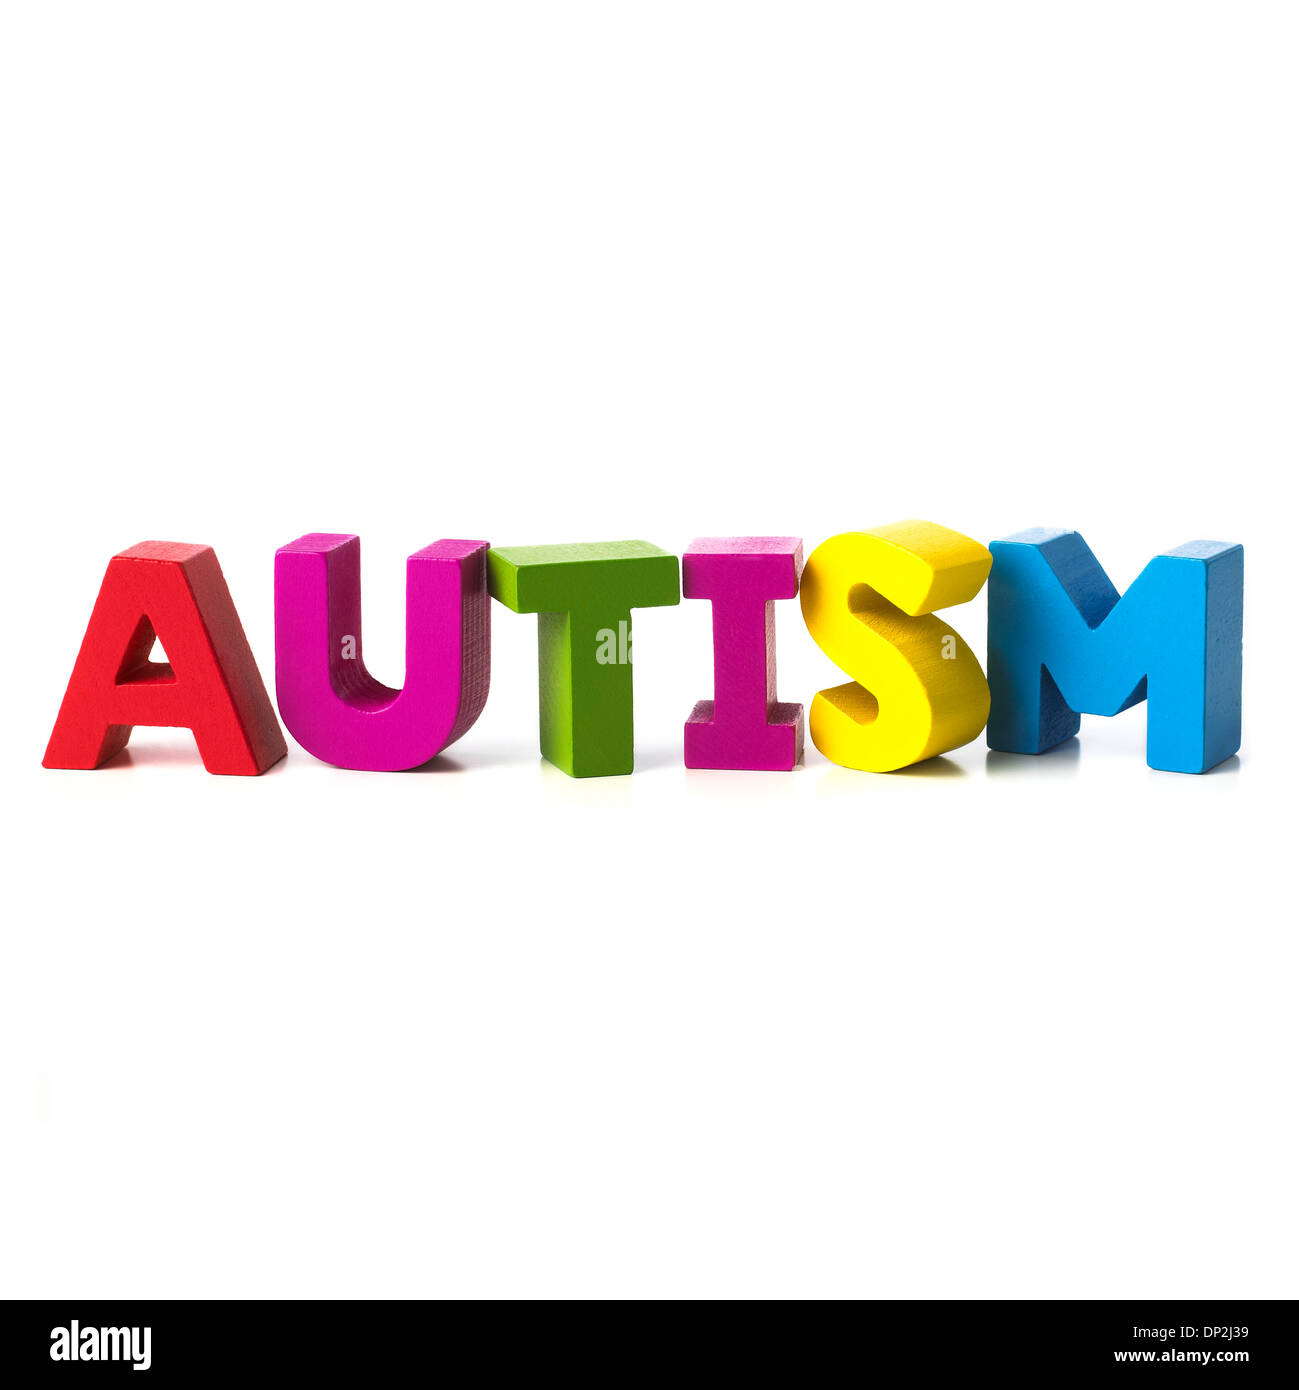 Autism, conceptual image Stock Photo